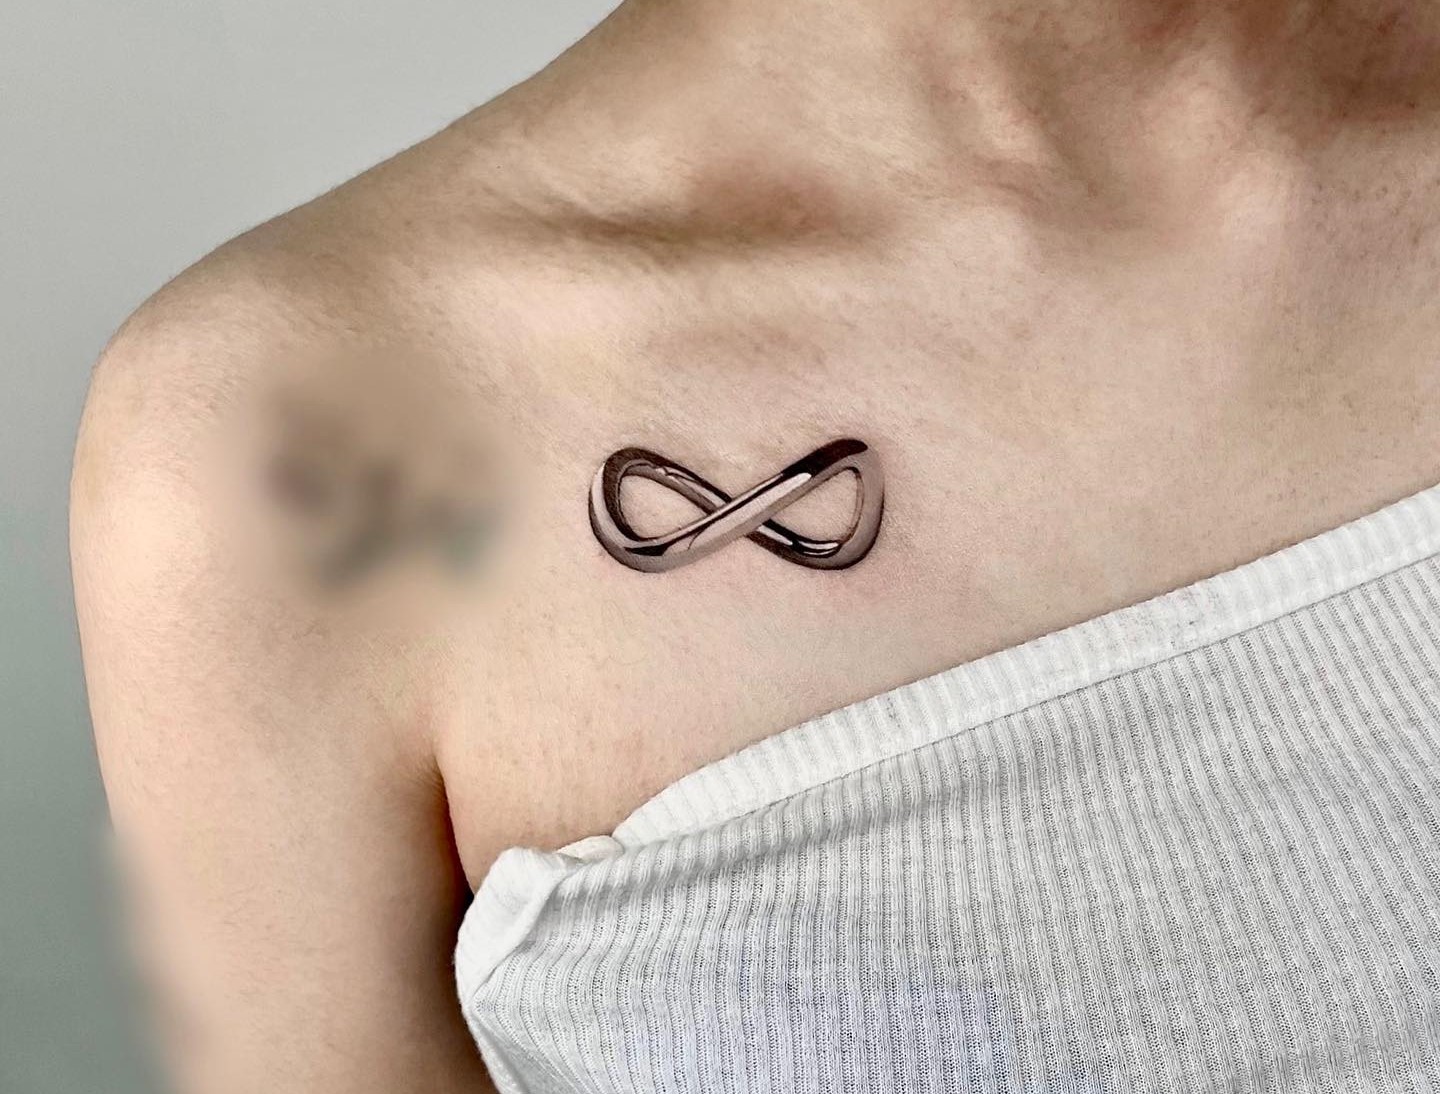 Love Infinity Symbol Temporary Tattoo - Set of 3 – Little Tattoos